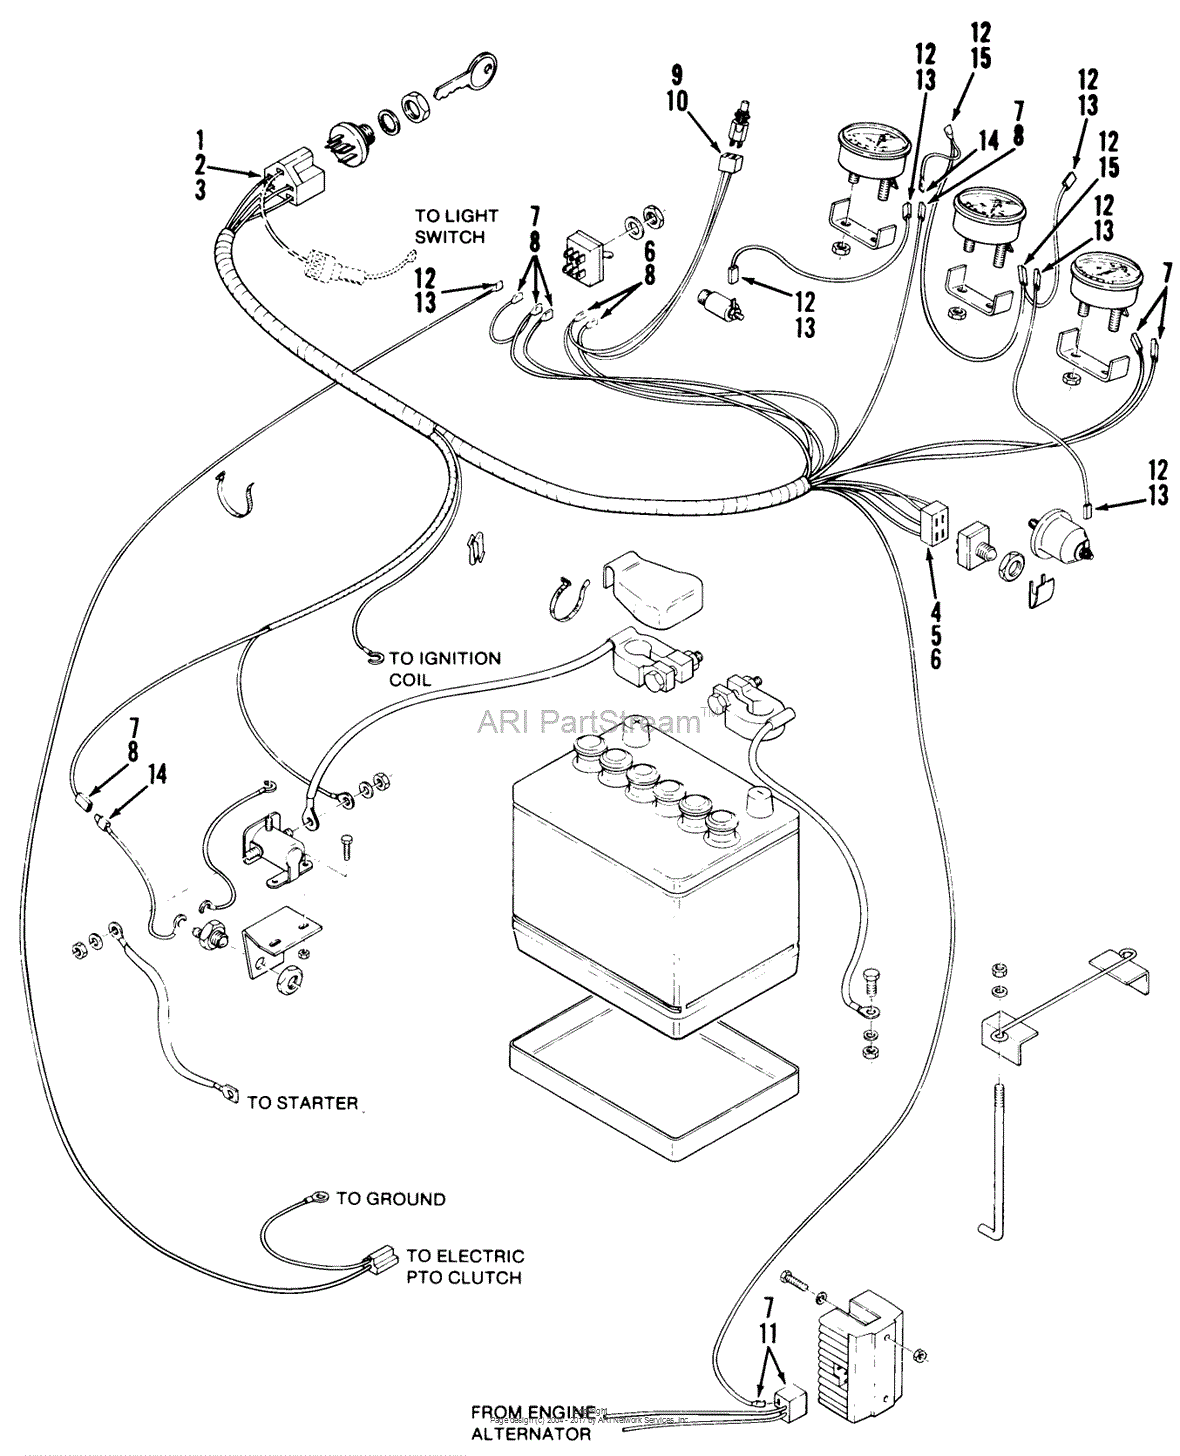 Toro Wiring Diagrams 1